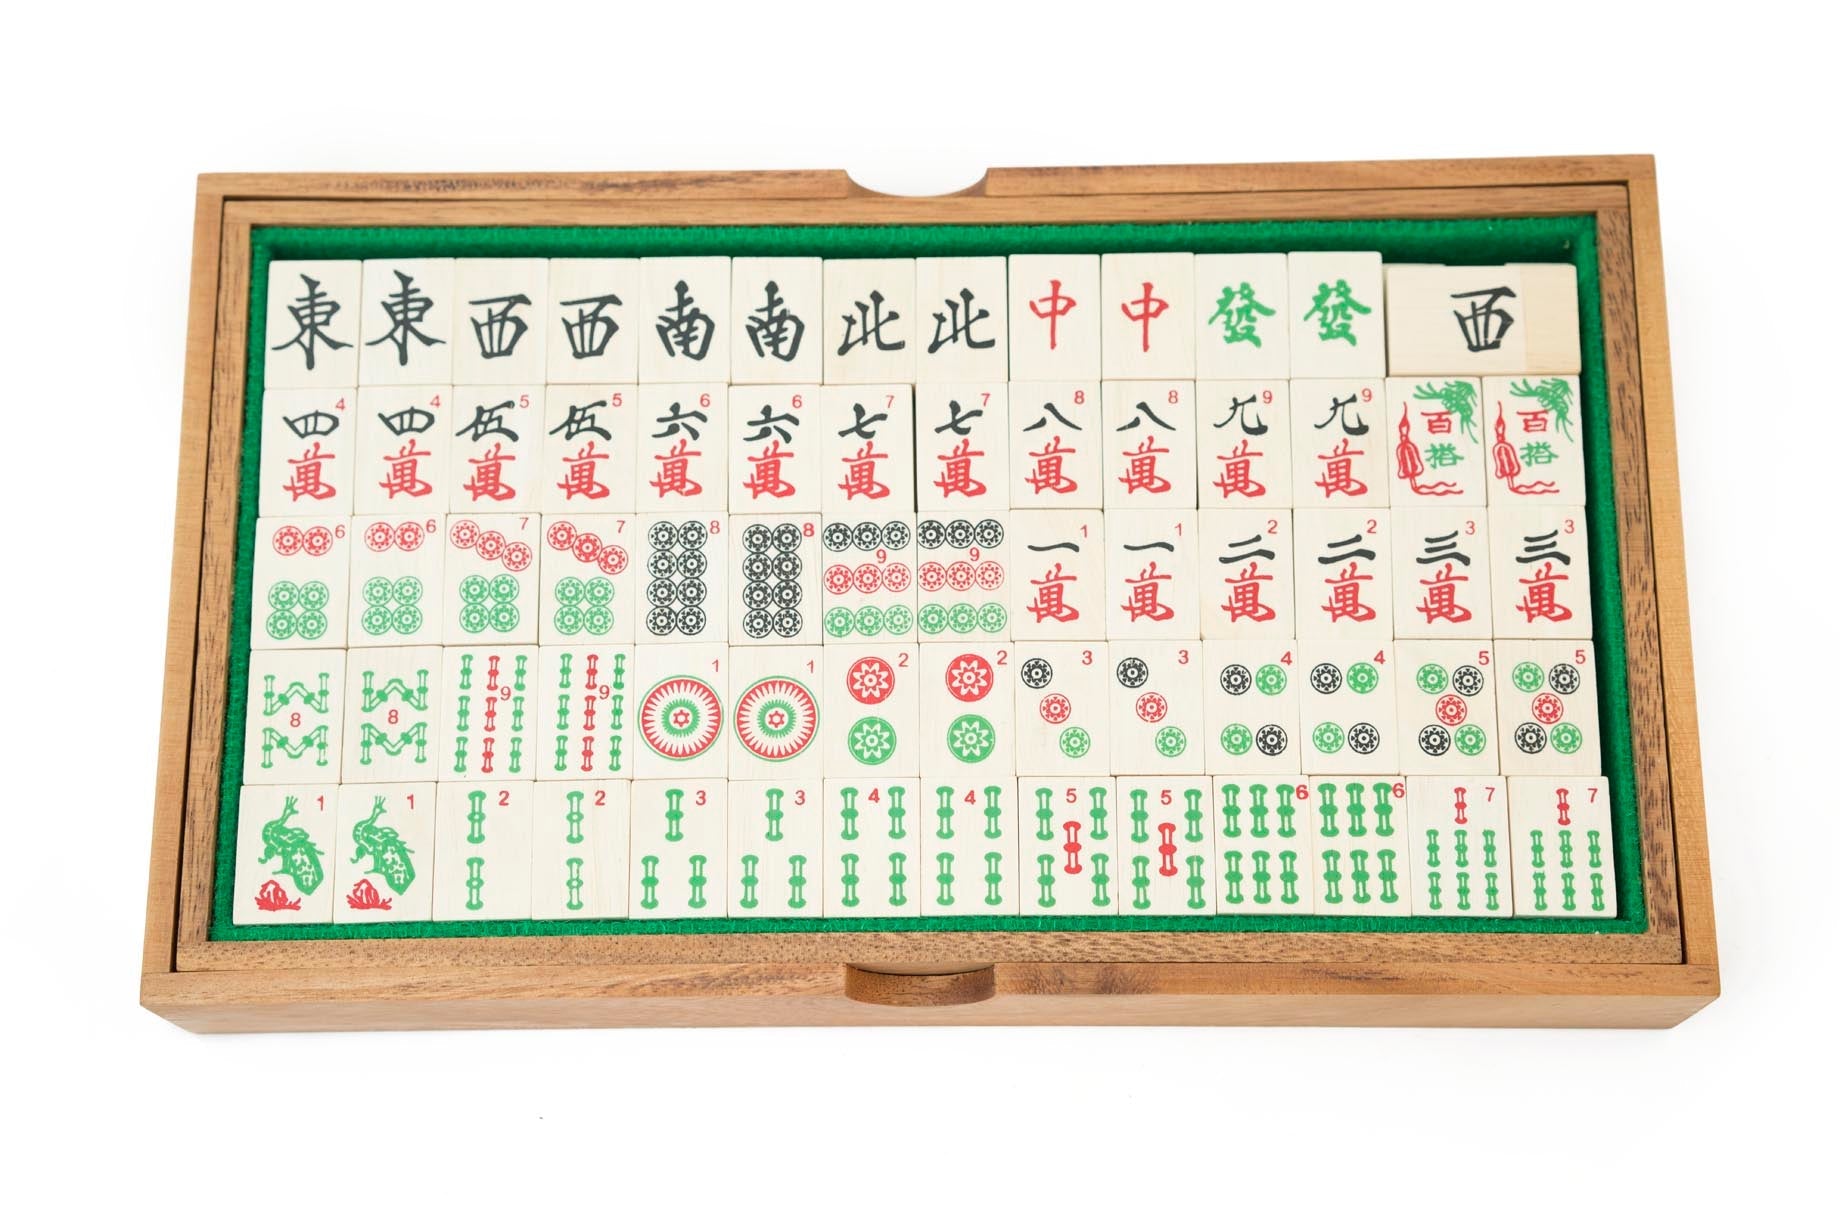 Mahjong Games 